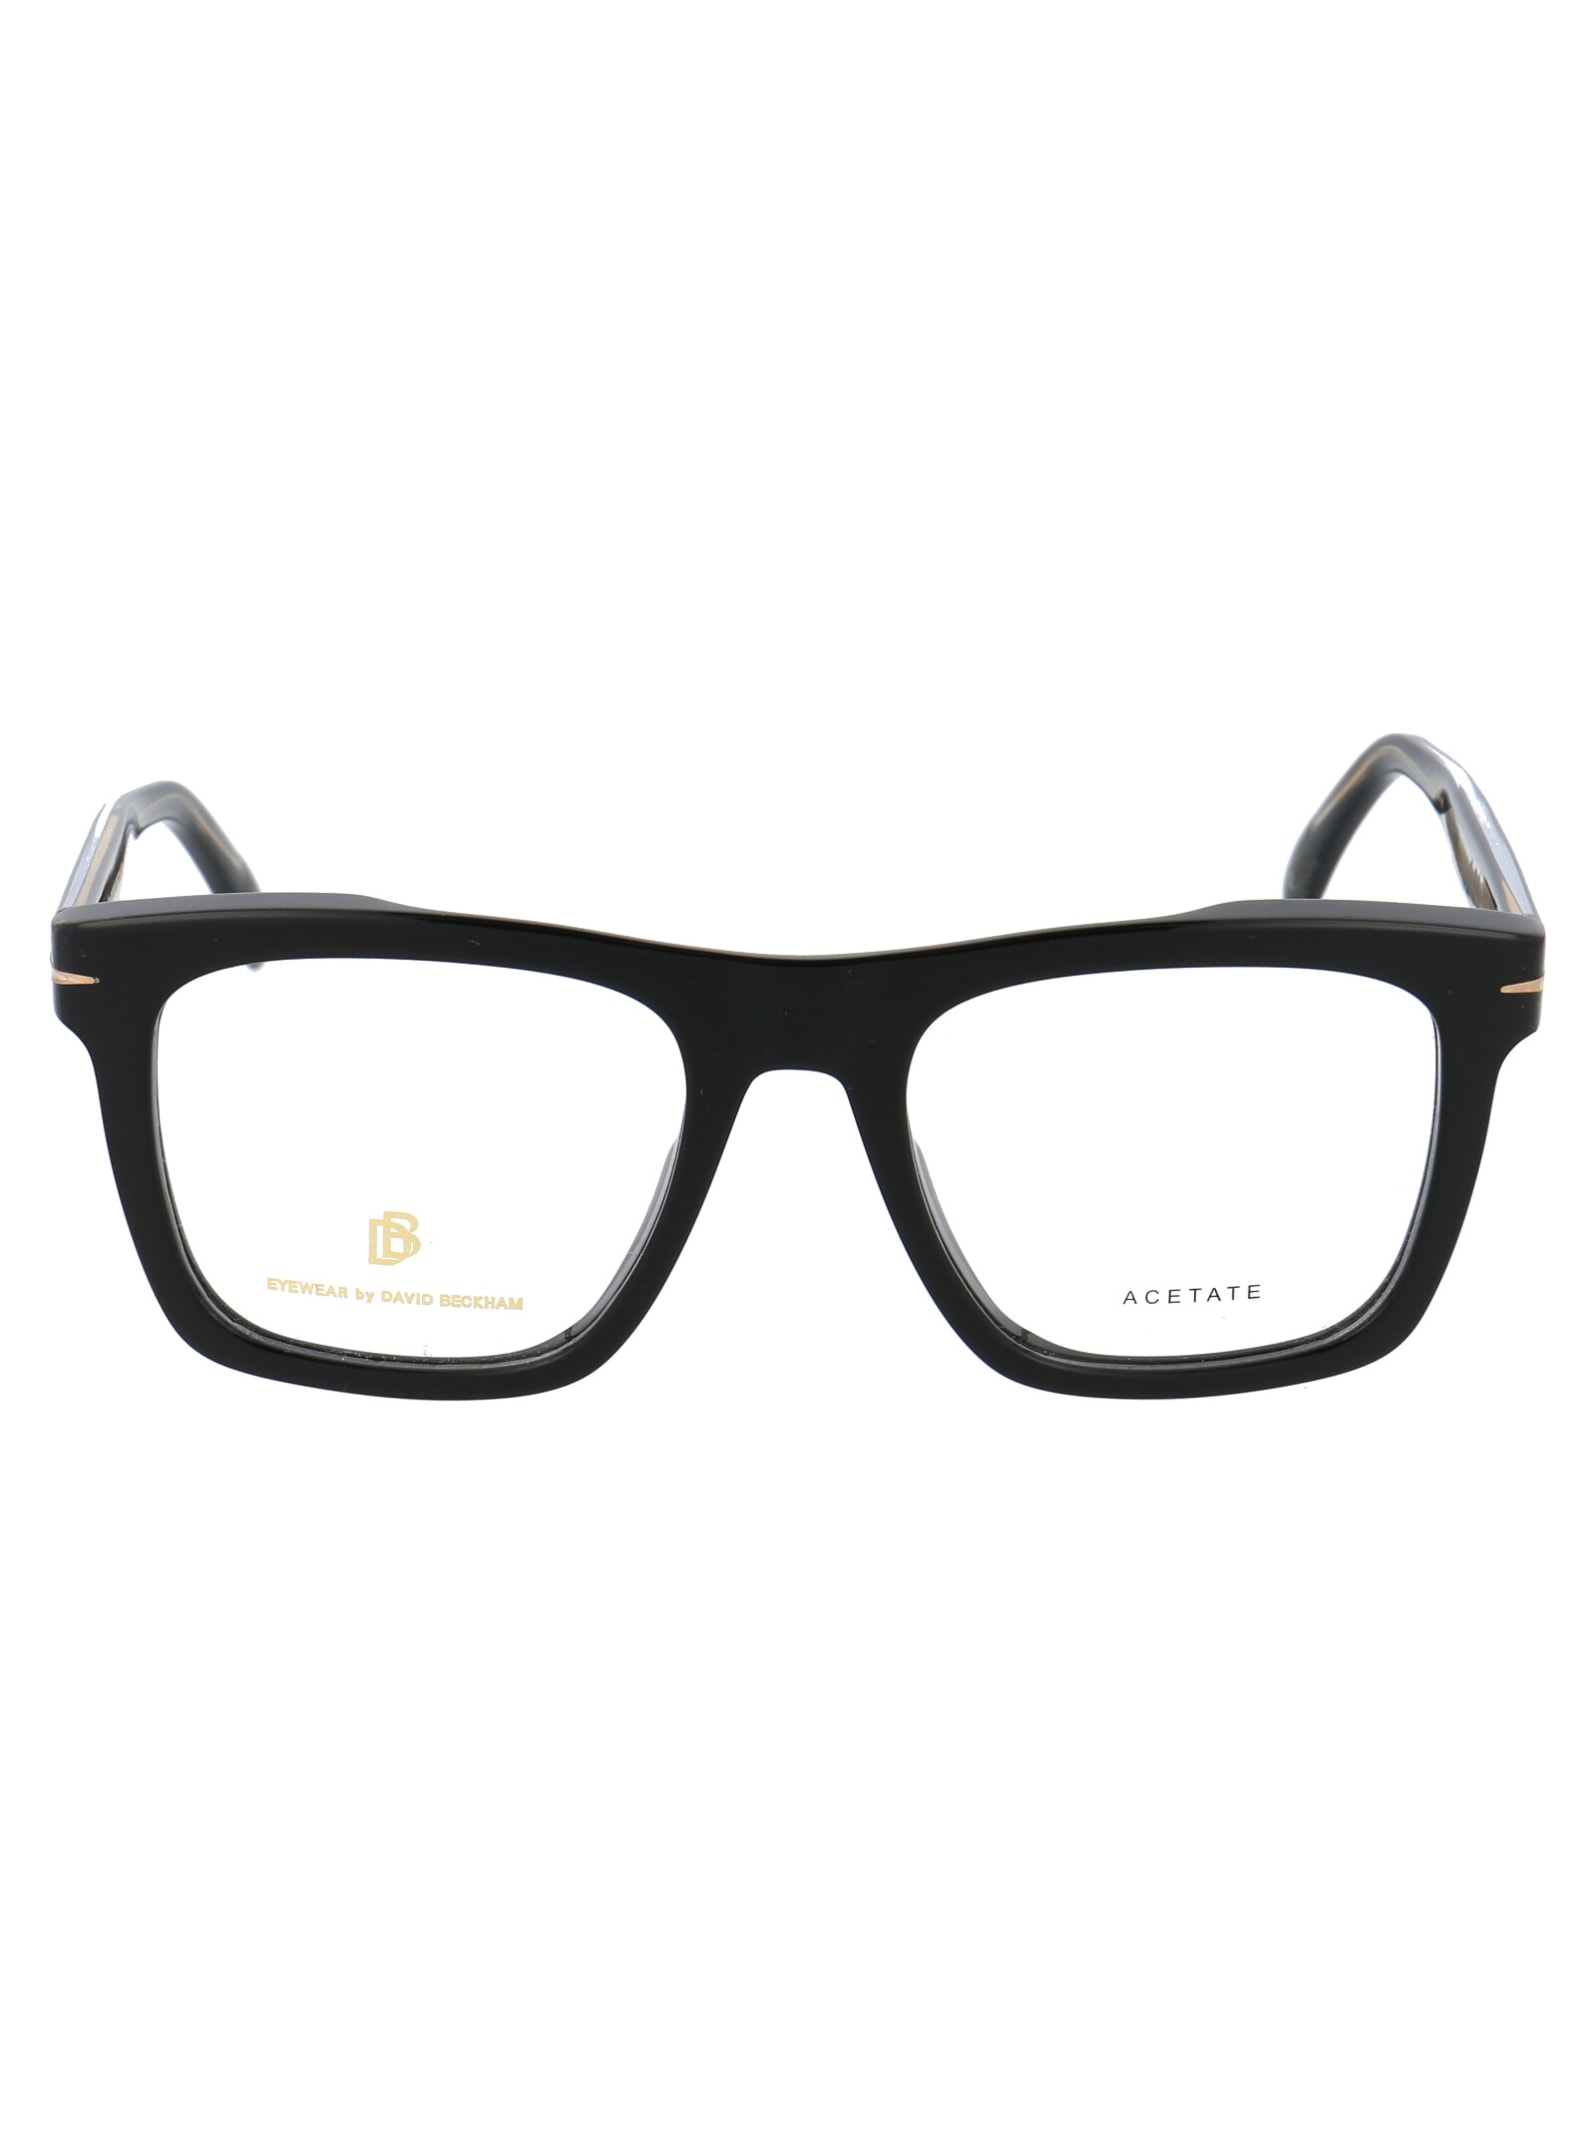 DB Eyewear by David Beckham Db 7020 Glasses